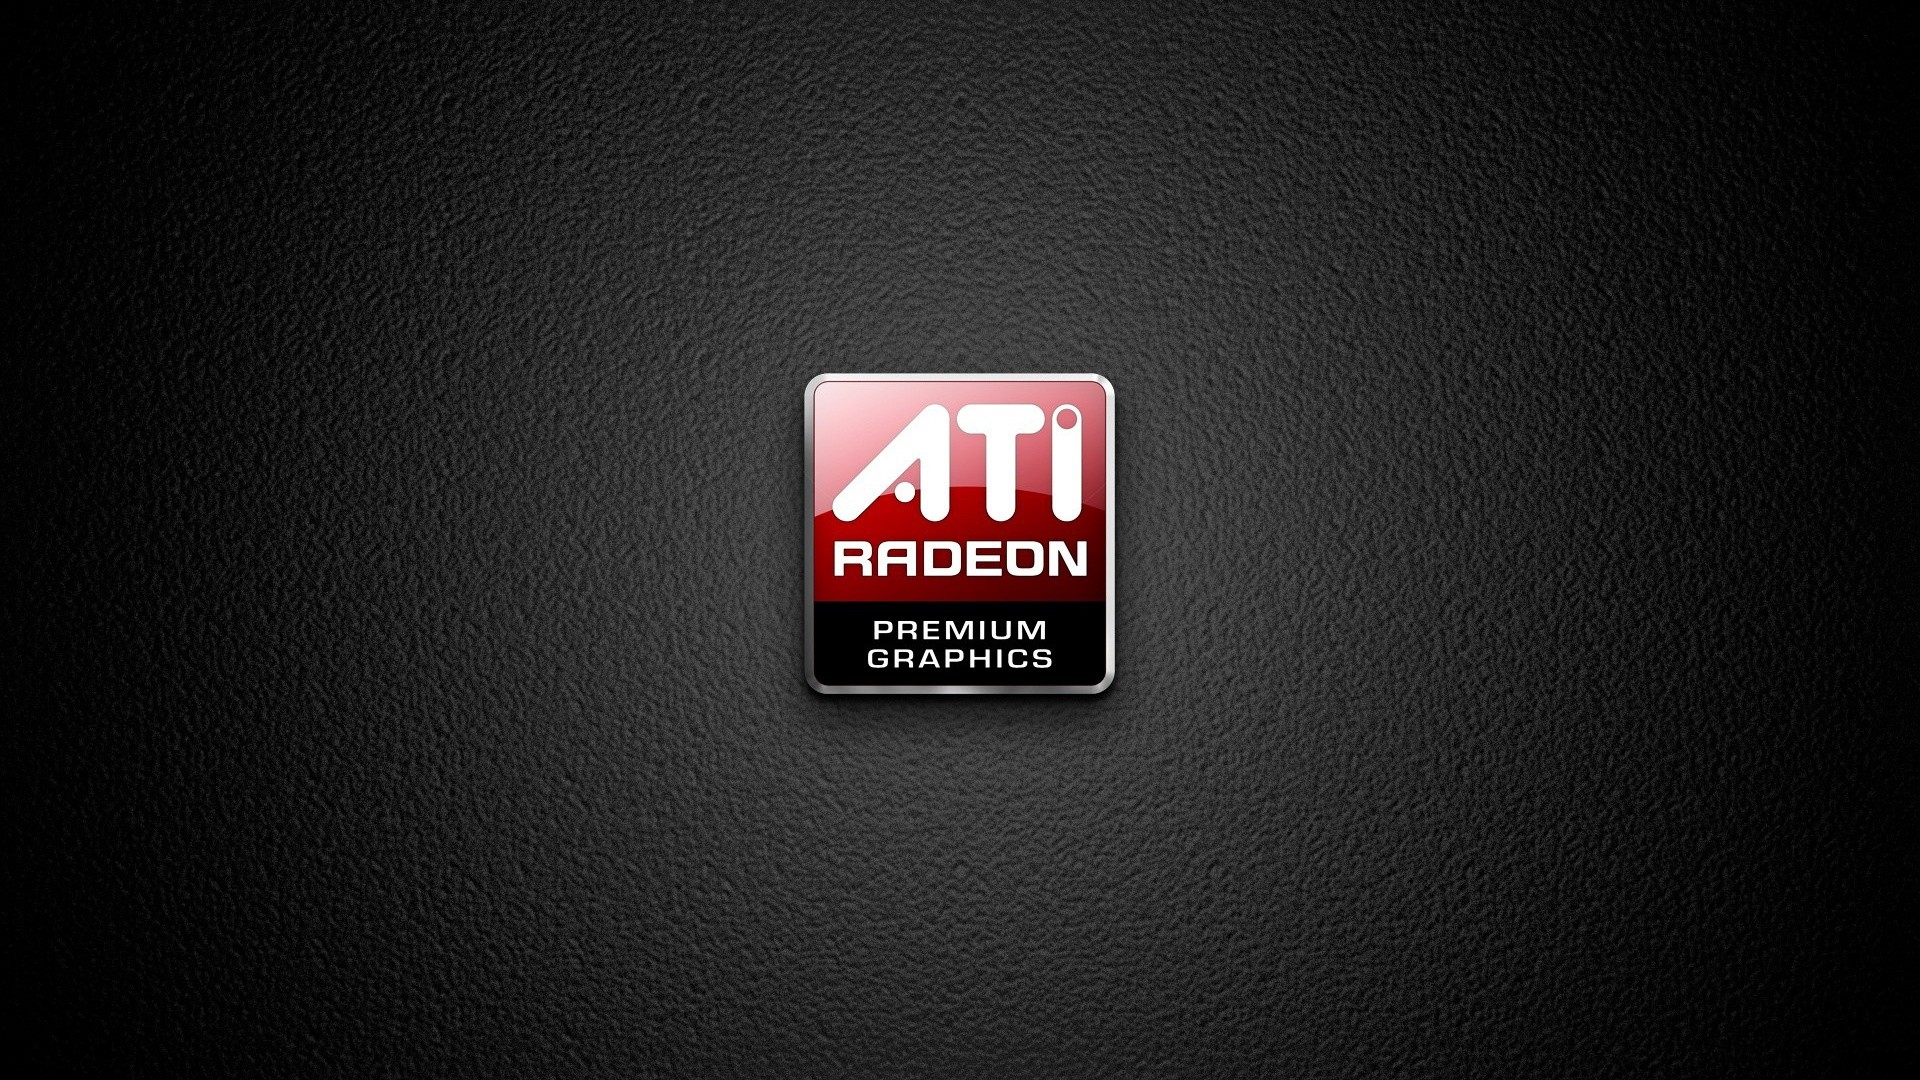 1920x1080 AMD Radeon Wallpapers - WallpaperSafari